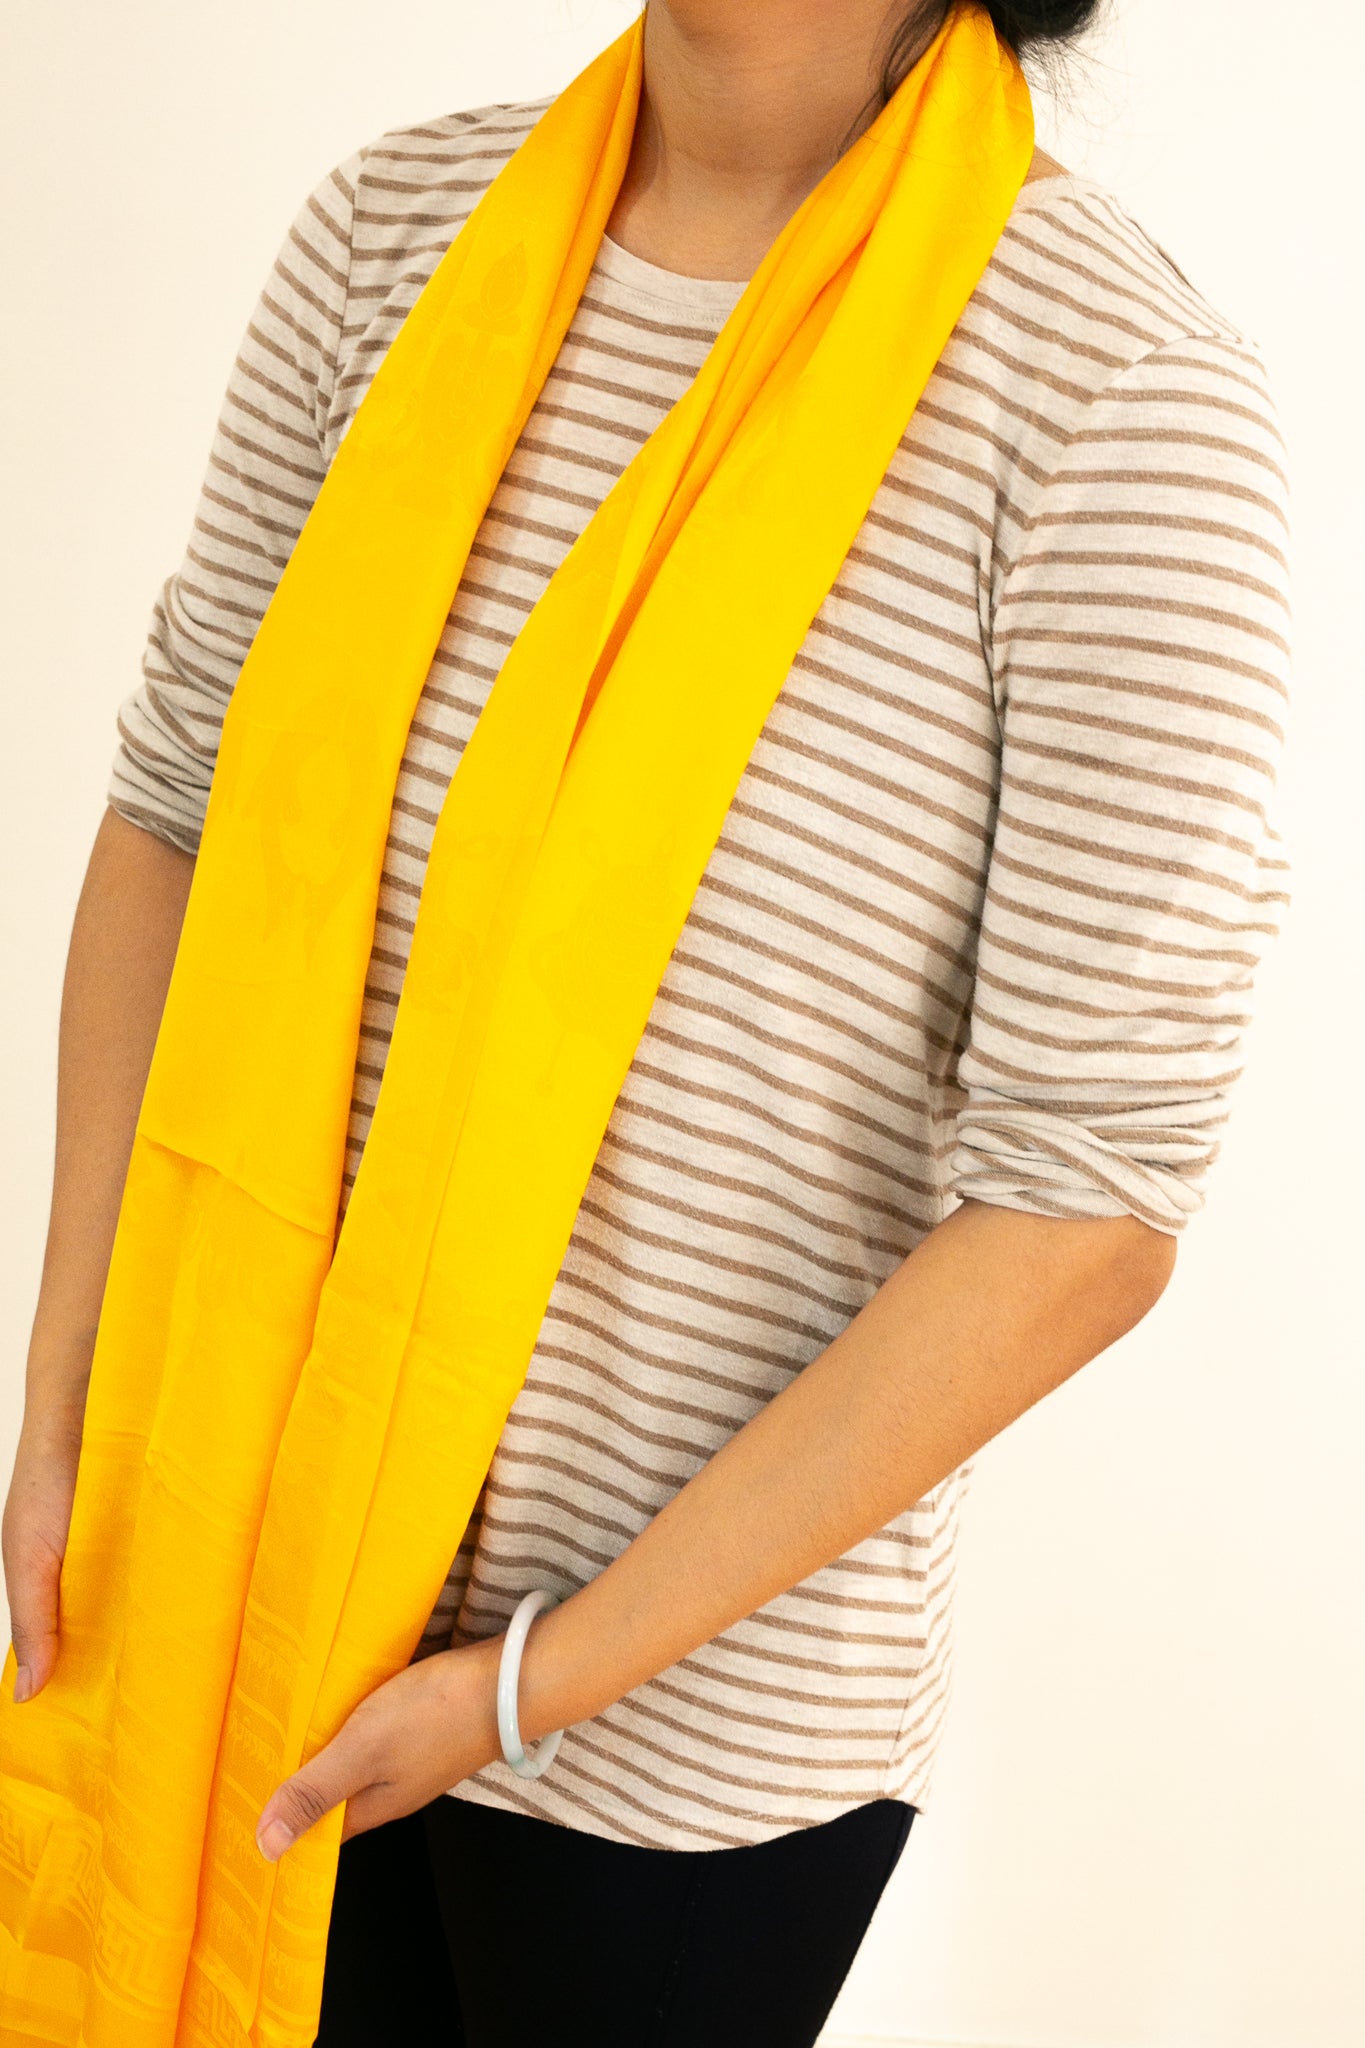 yellow khada worn around the neck in portrait mode